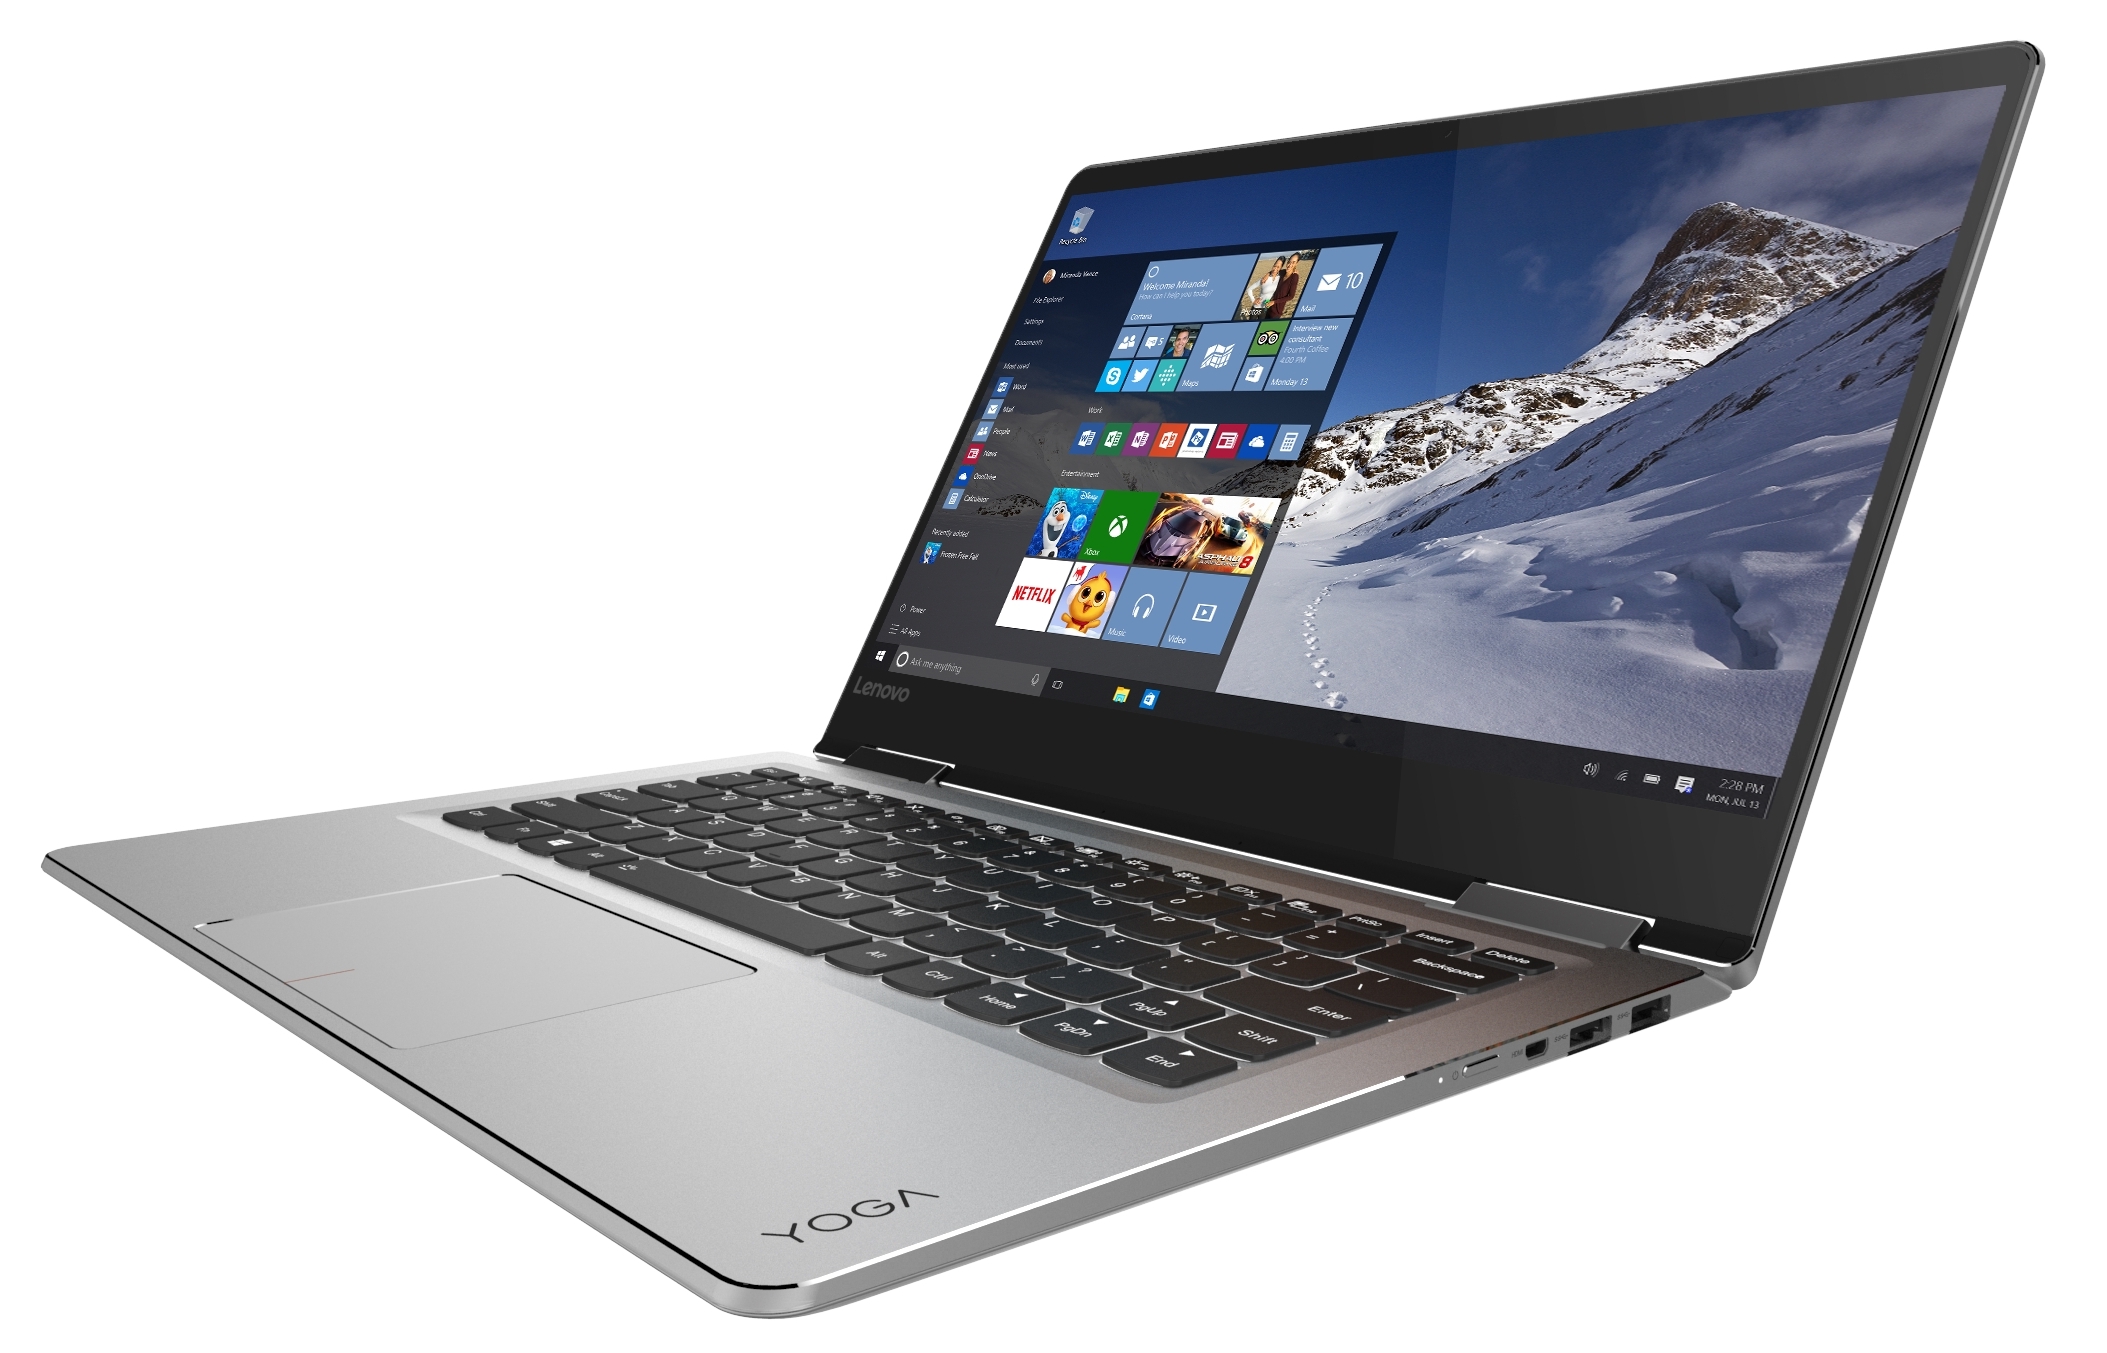 Lenovo Launches New MIIX 310 Tablet, Yoga 510 And Yoga 710